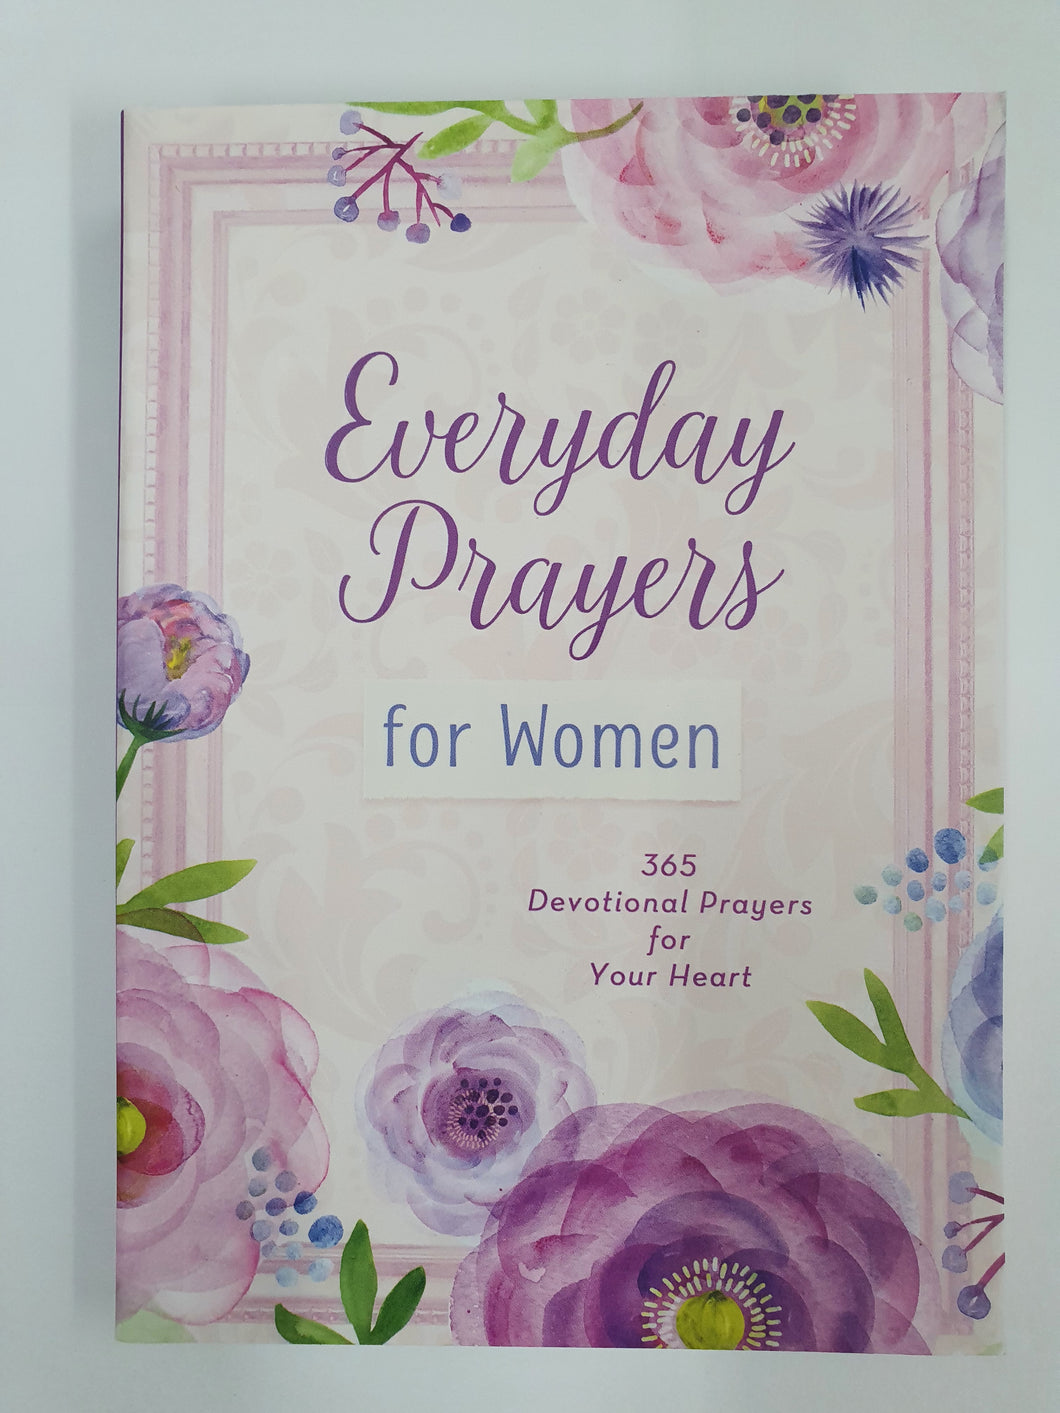 Everyday Prayers for Women